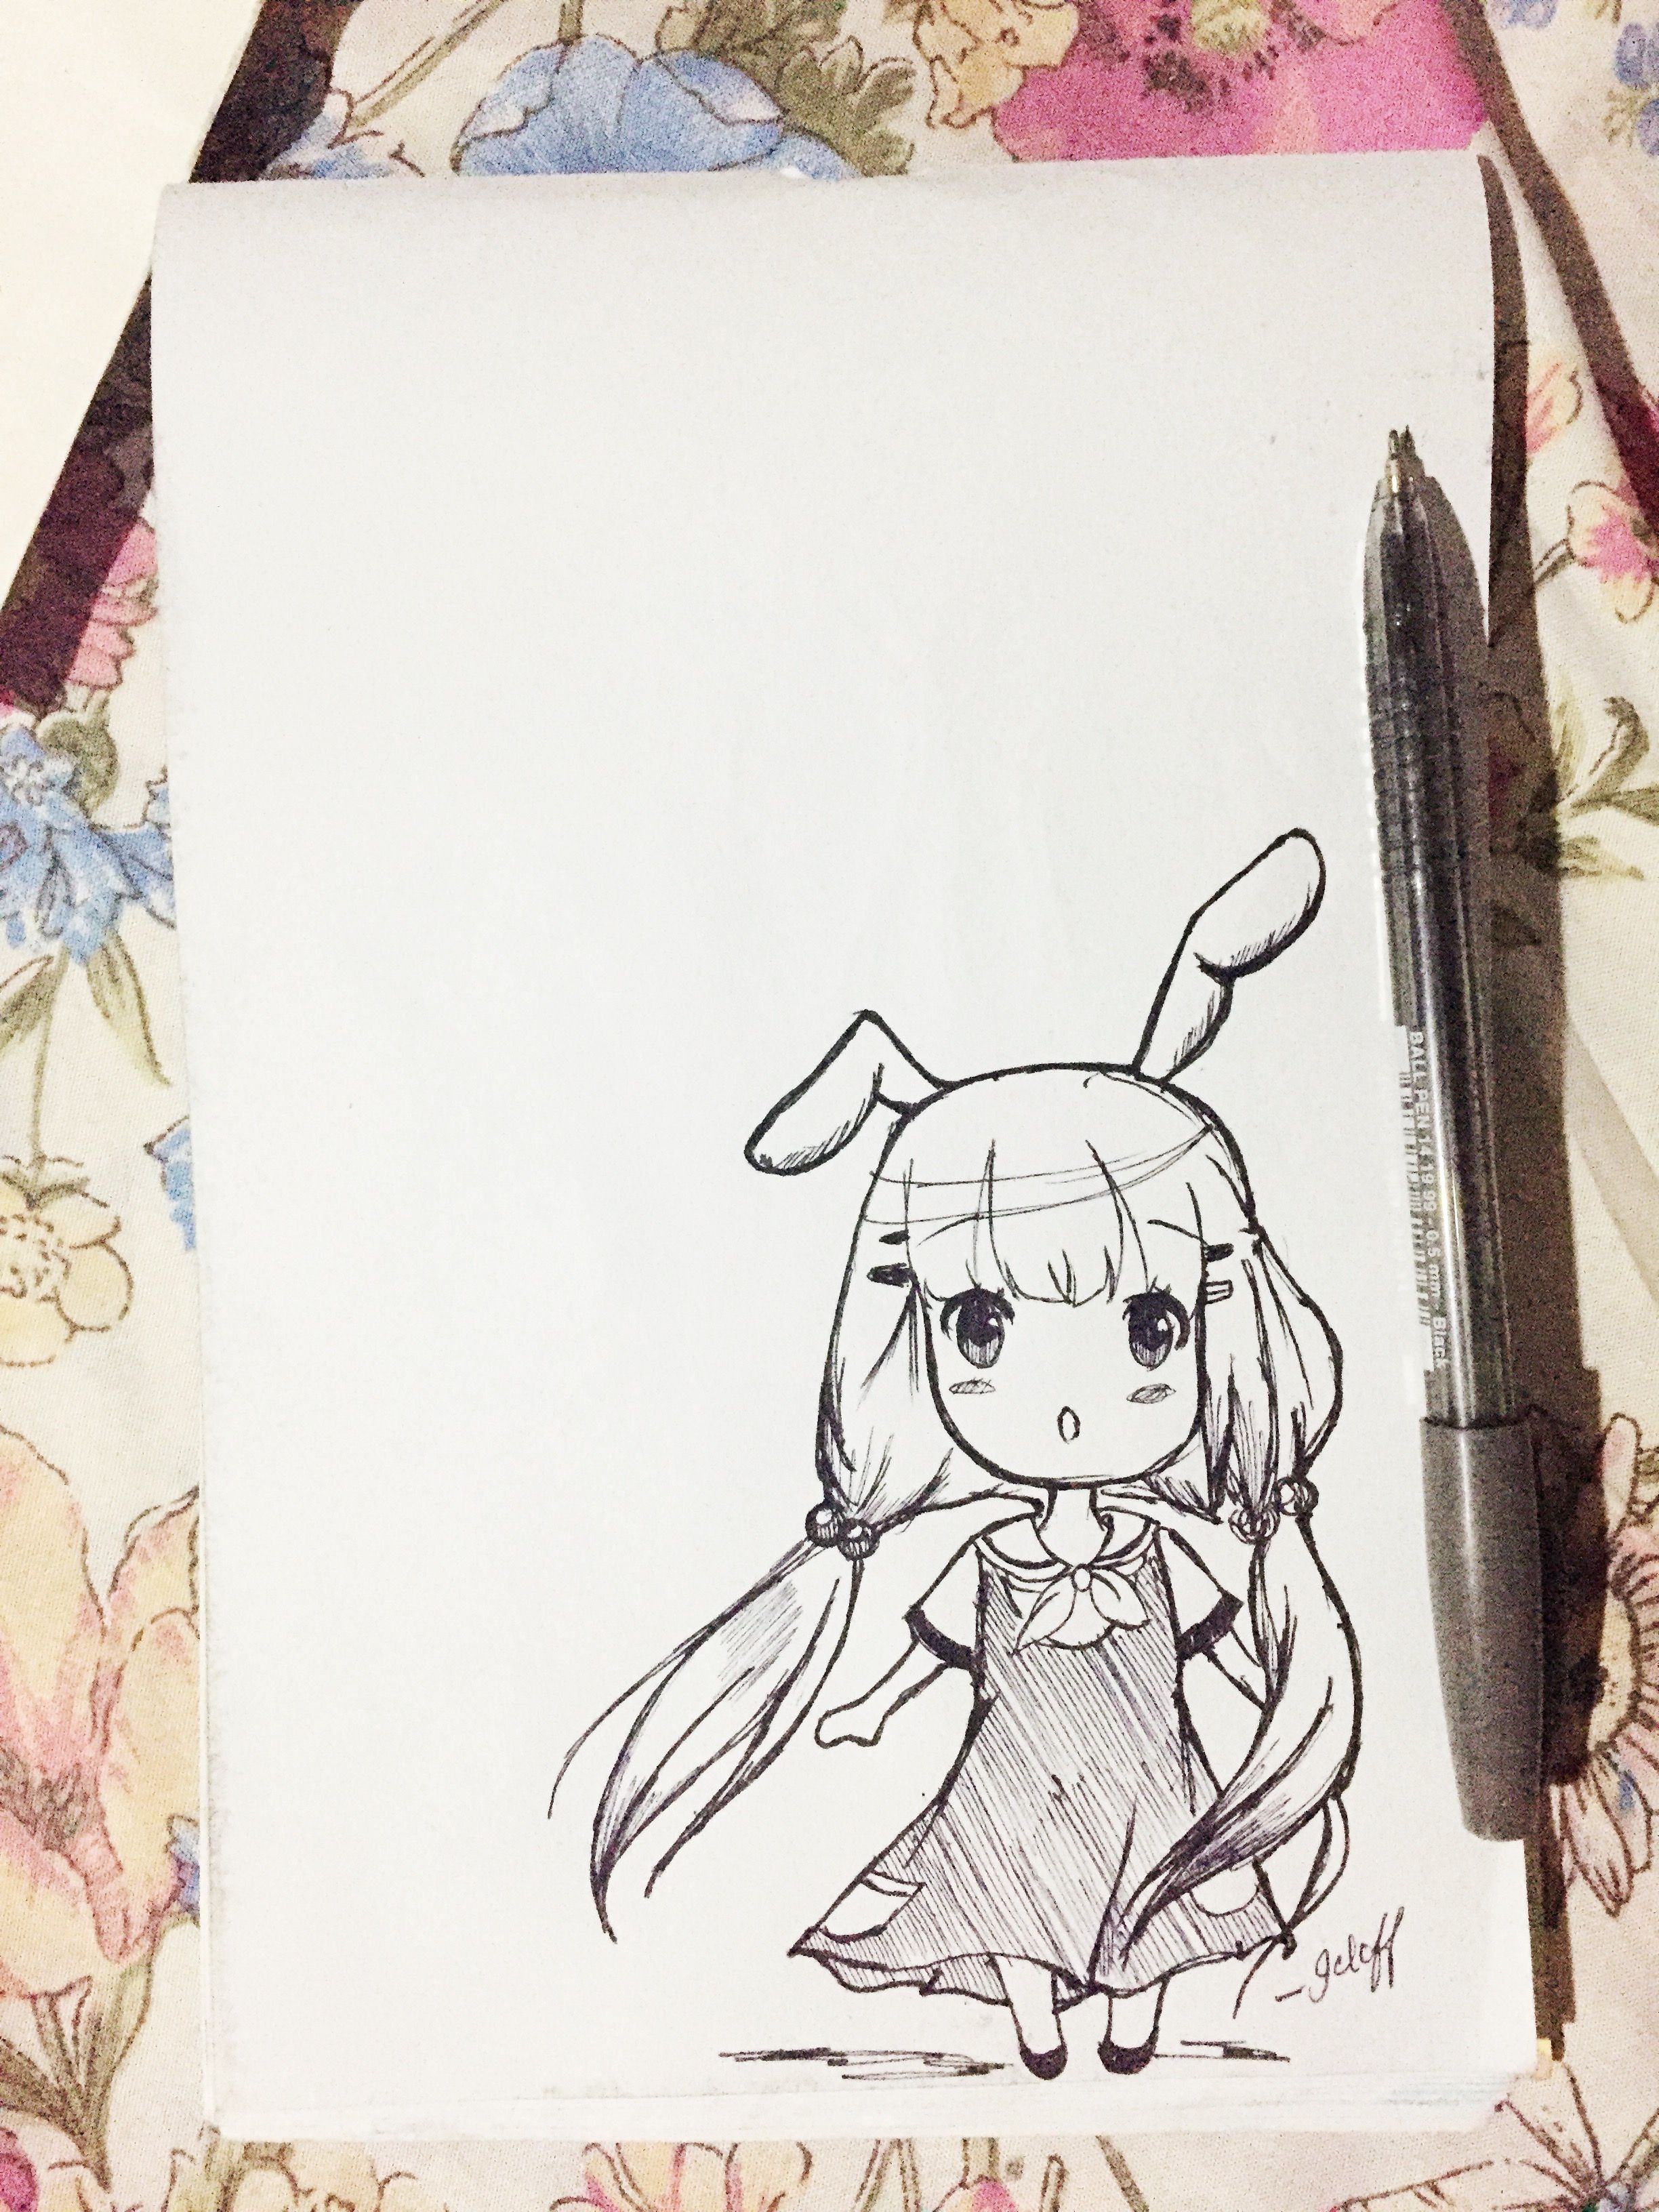 Lolly on Twitter My best drawing anime bleach ichigo art manga pen  drawing httpstcoX8KqVb23Tf  Twitter